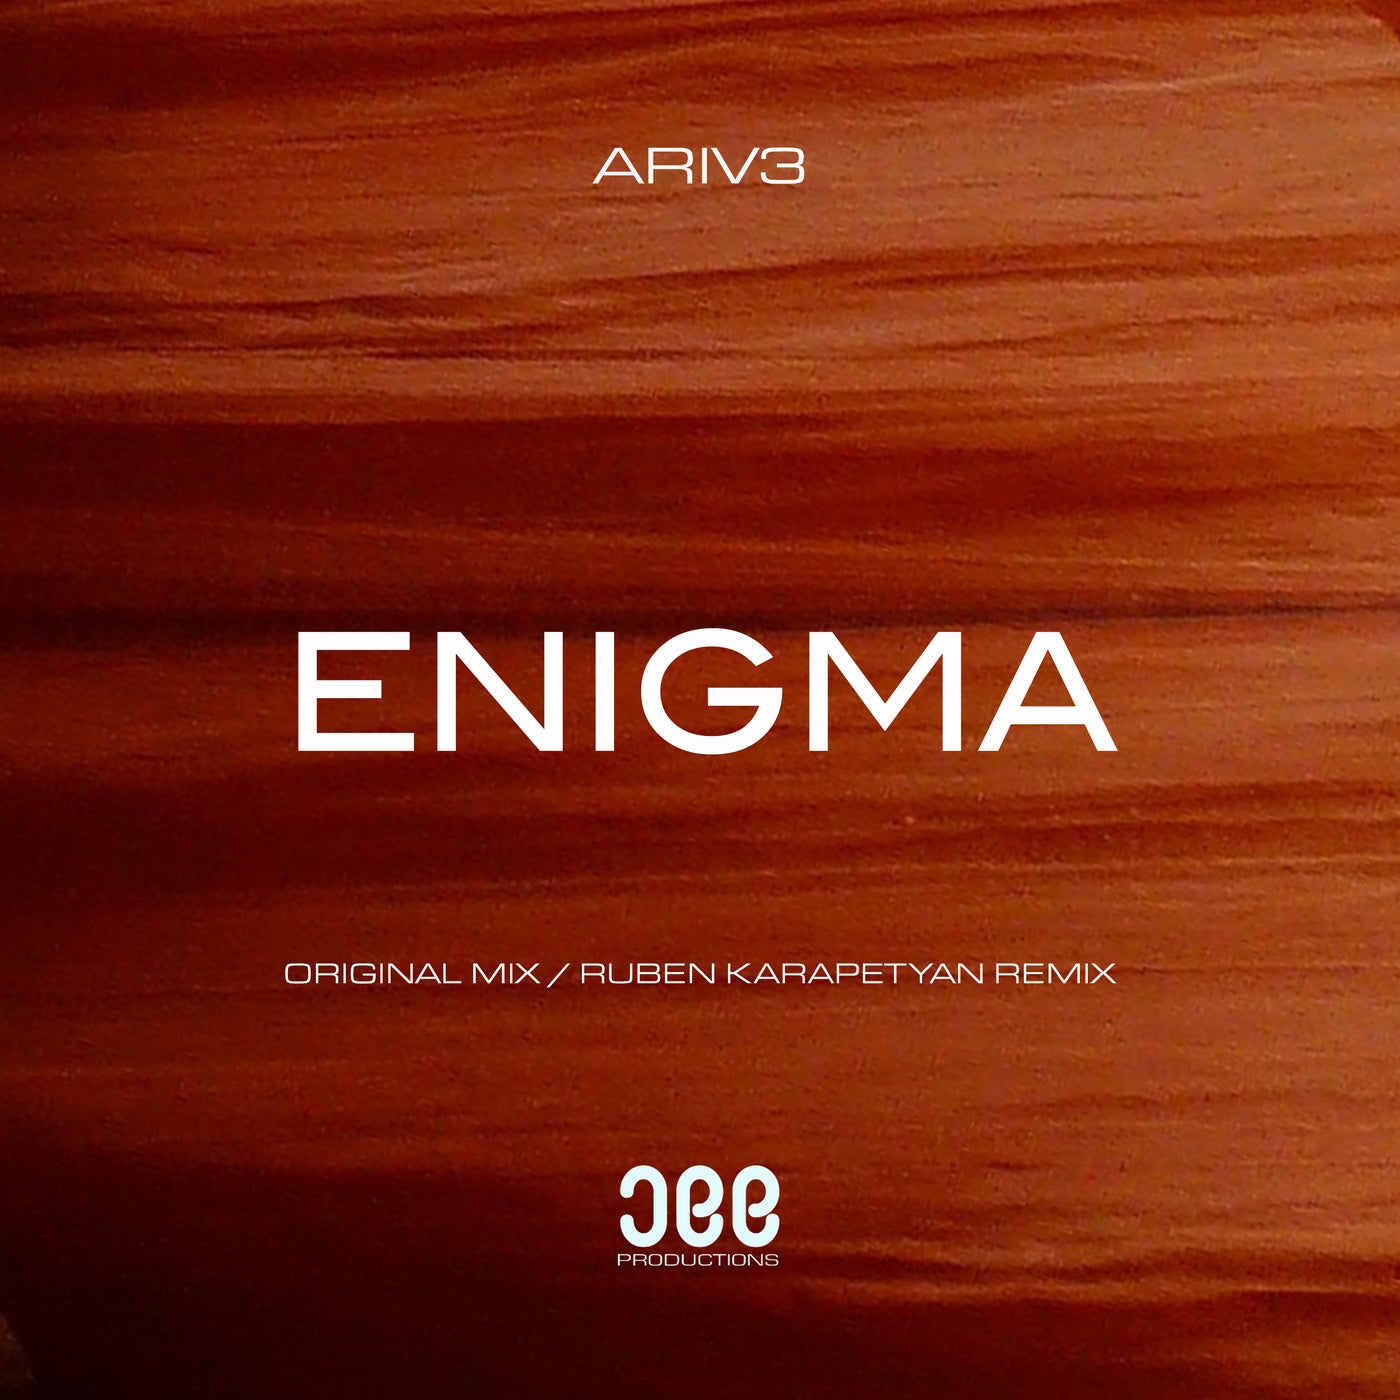 Cover - ARIV3 - Enigma (Original Mix)